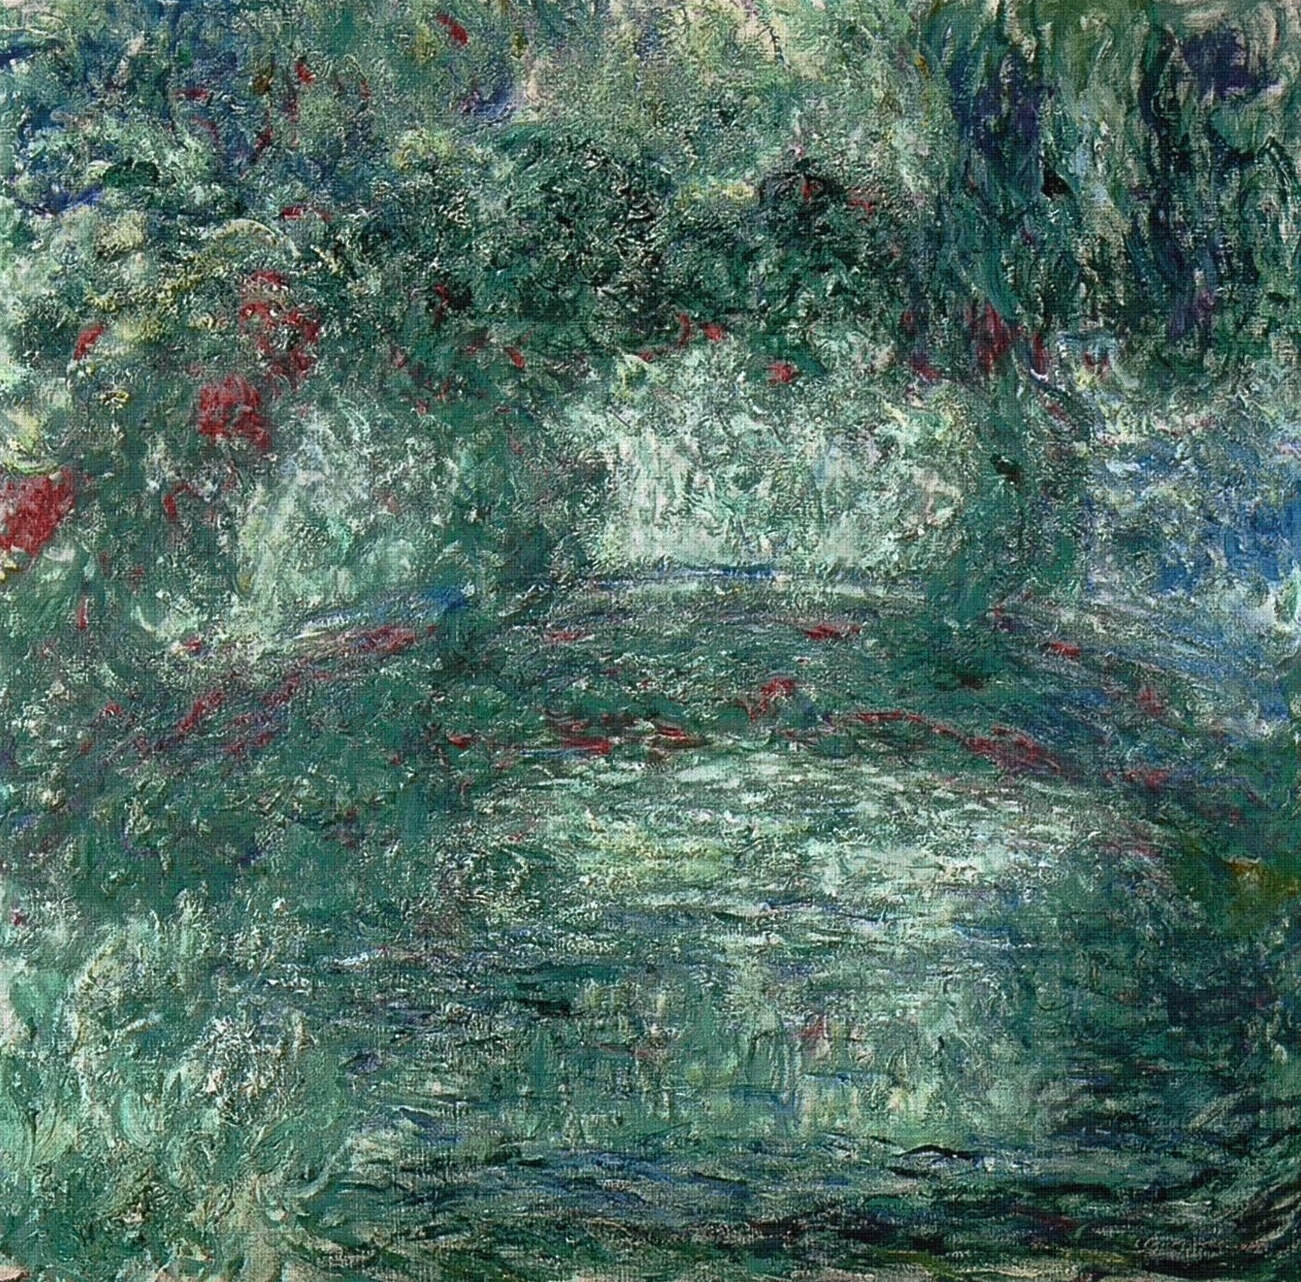 Claude+Monet-1840-1926 (458).jpg